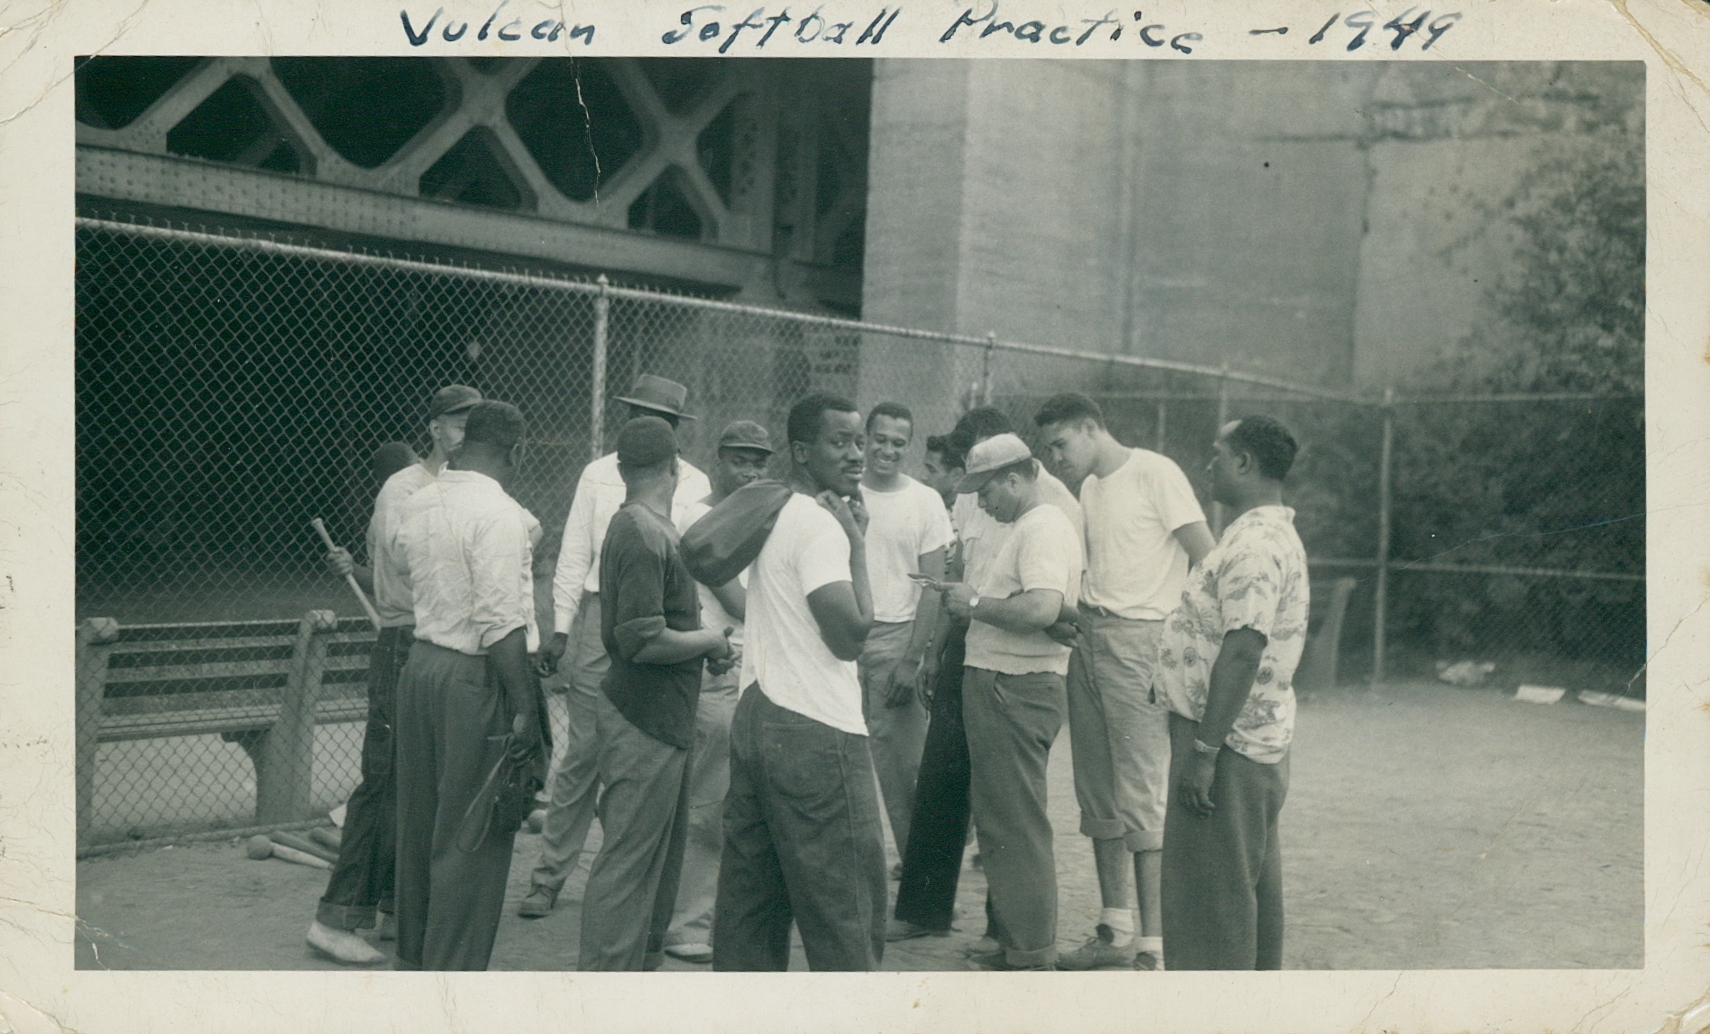 Vulcan Softball Practice in 1949.